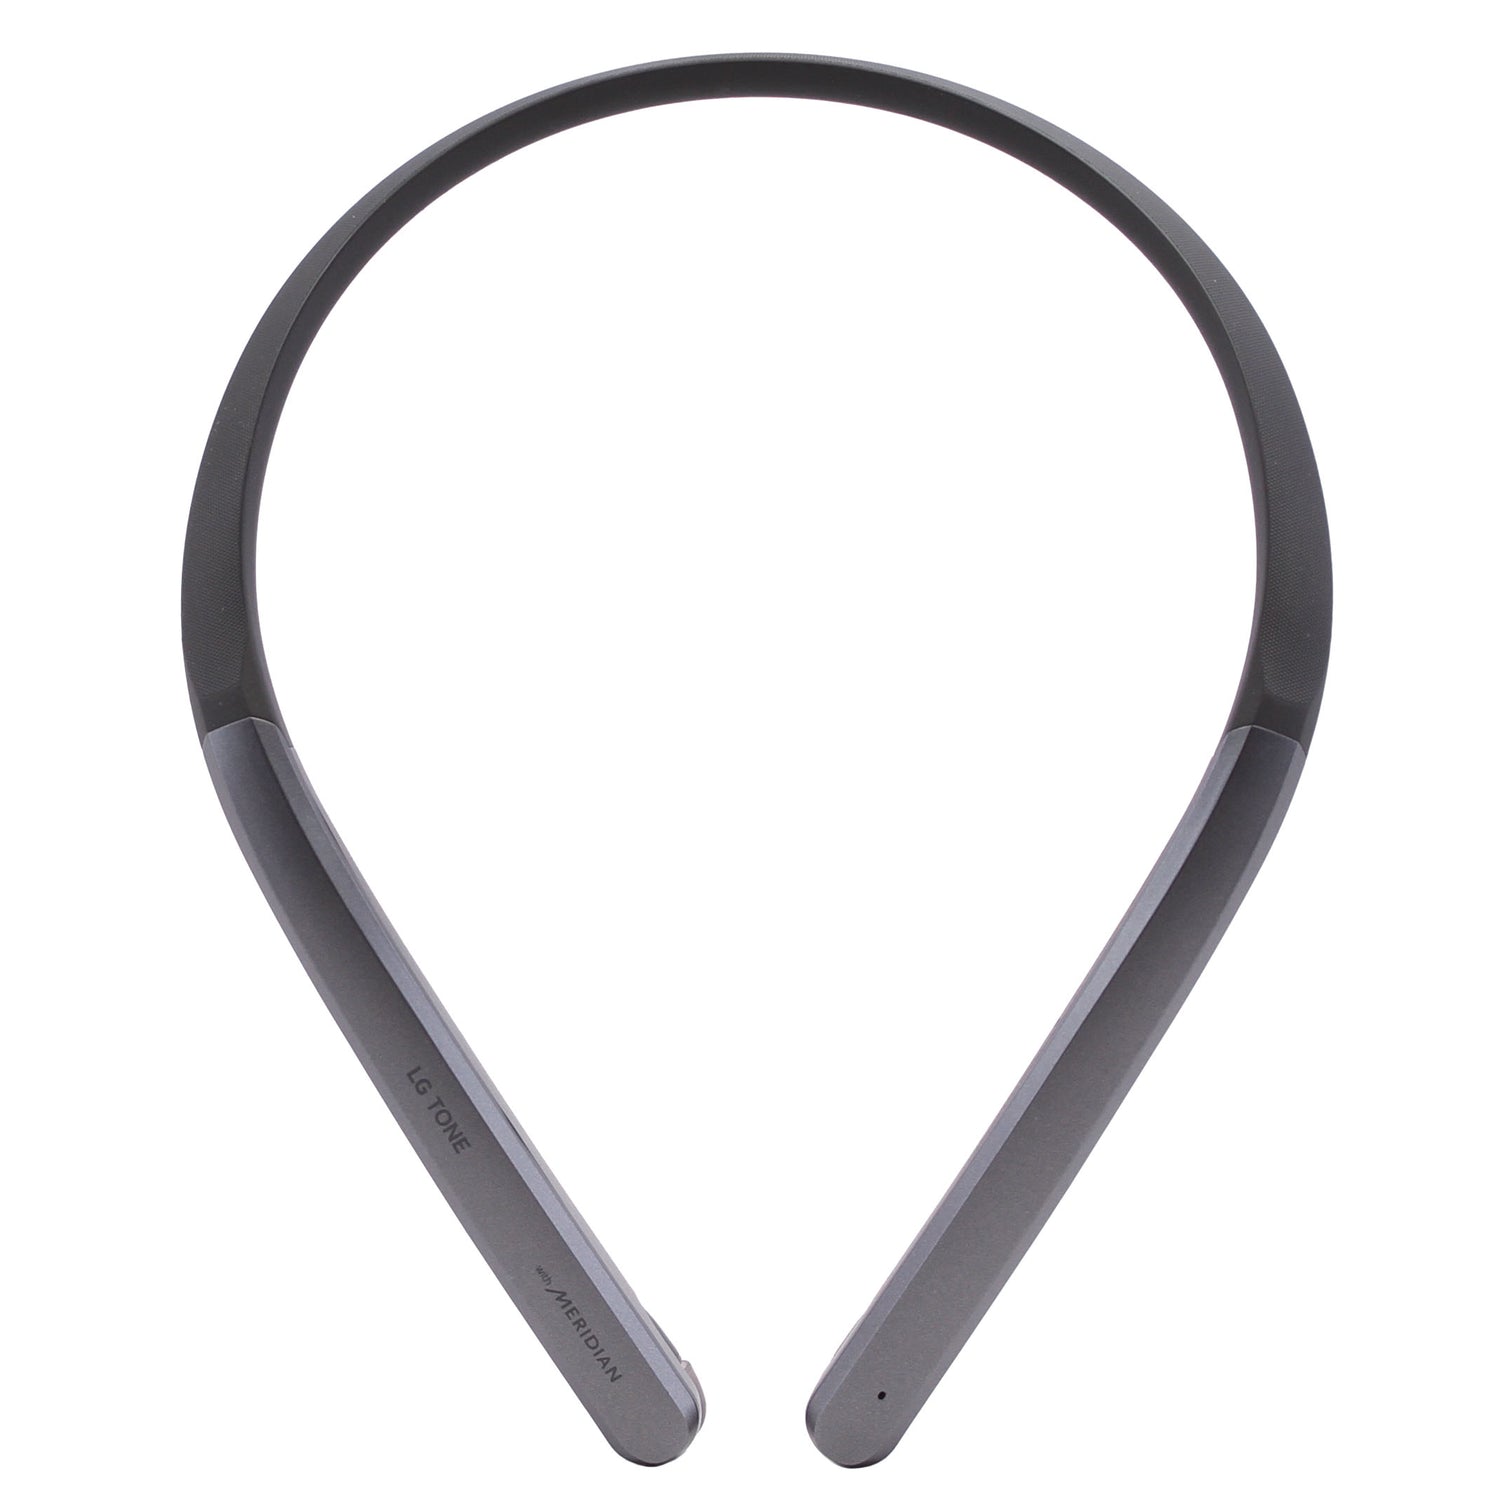 LG TONE Flex HBS-XL7 Bluetooth Wireless Stereo Headset - Black (Pre-Owned)